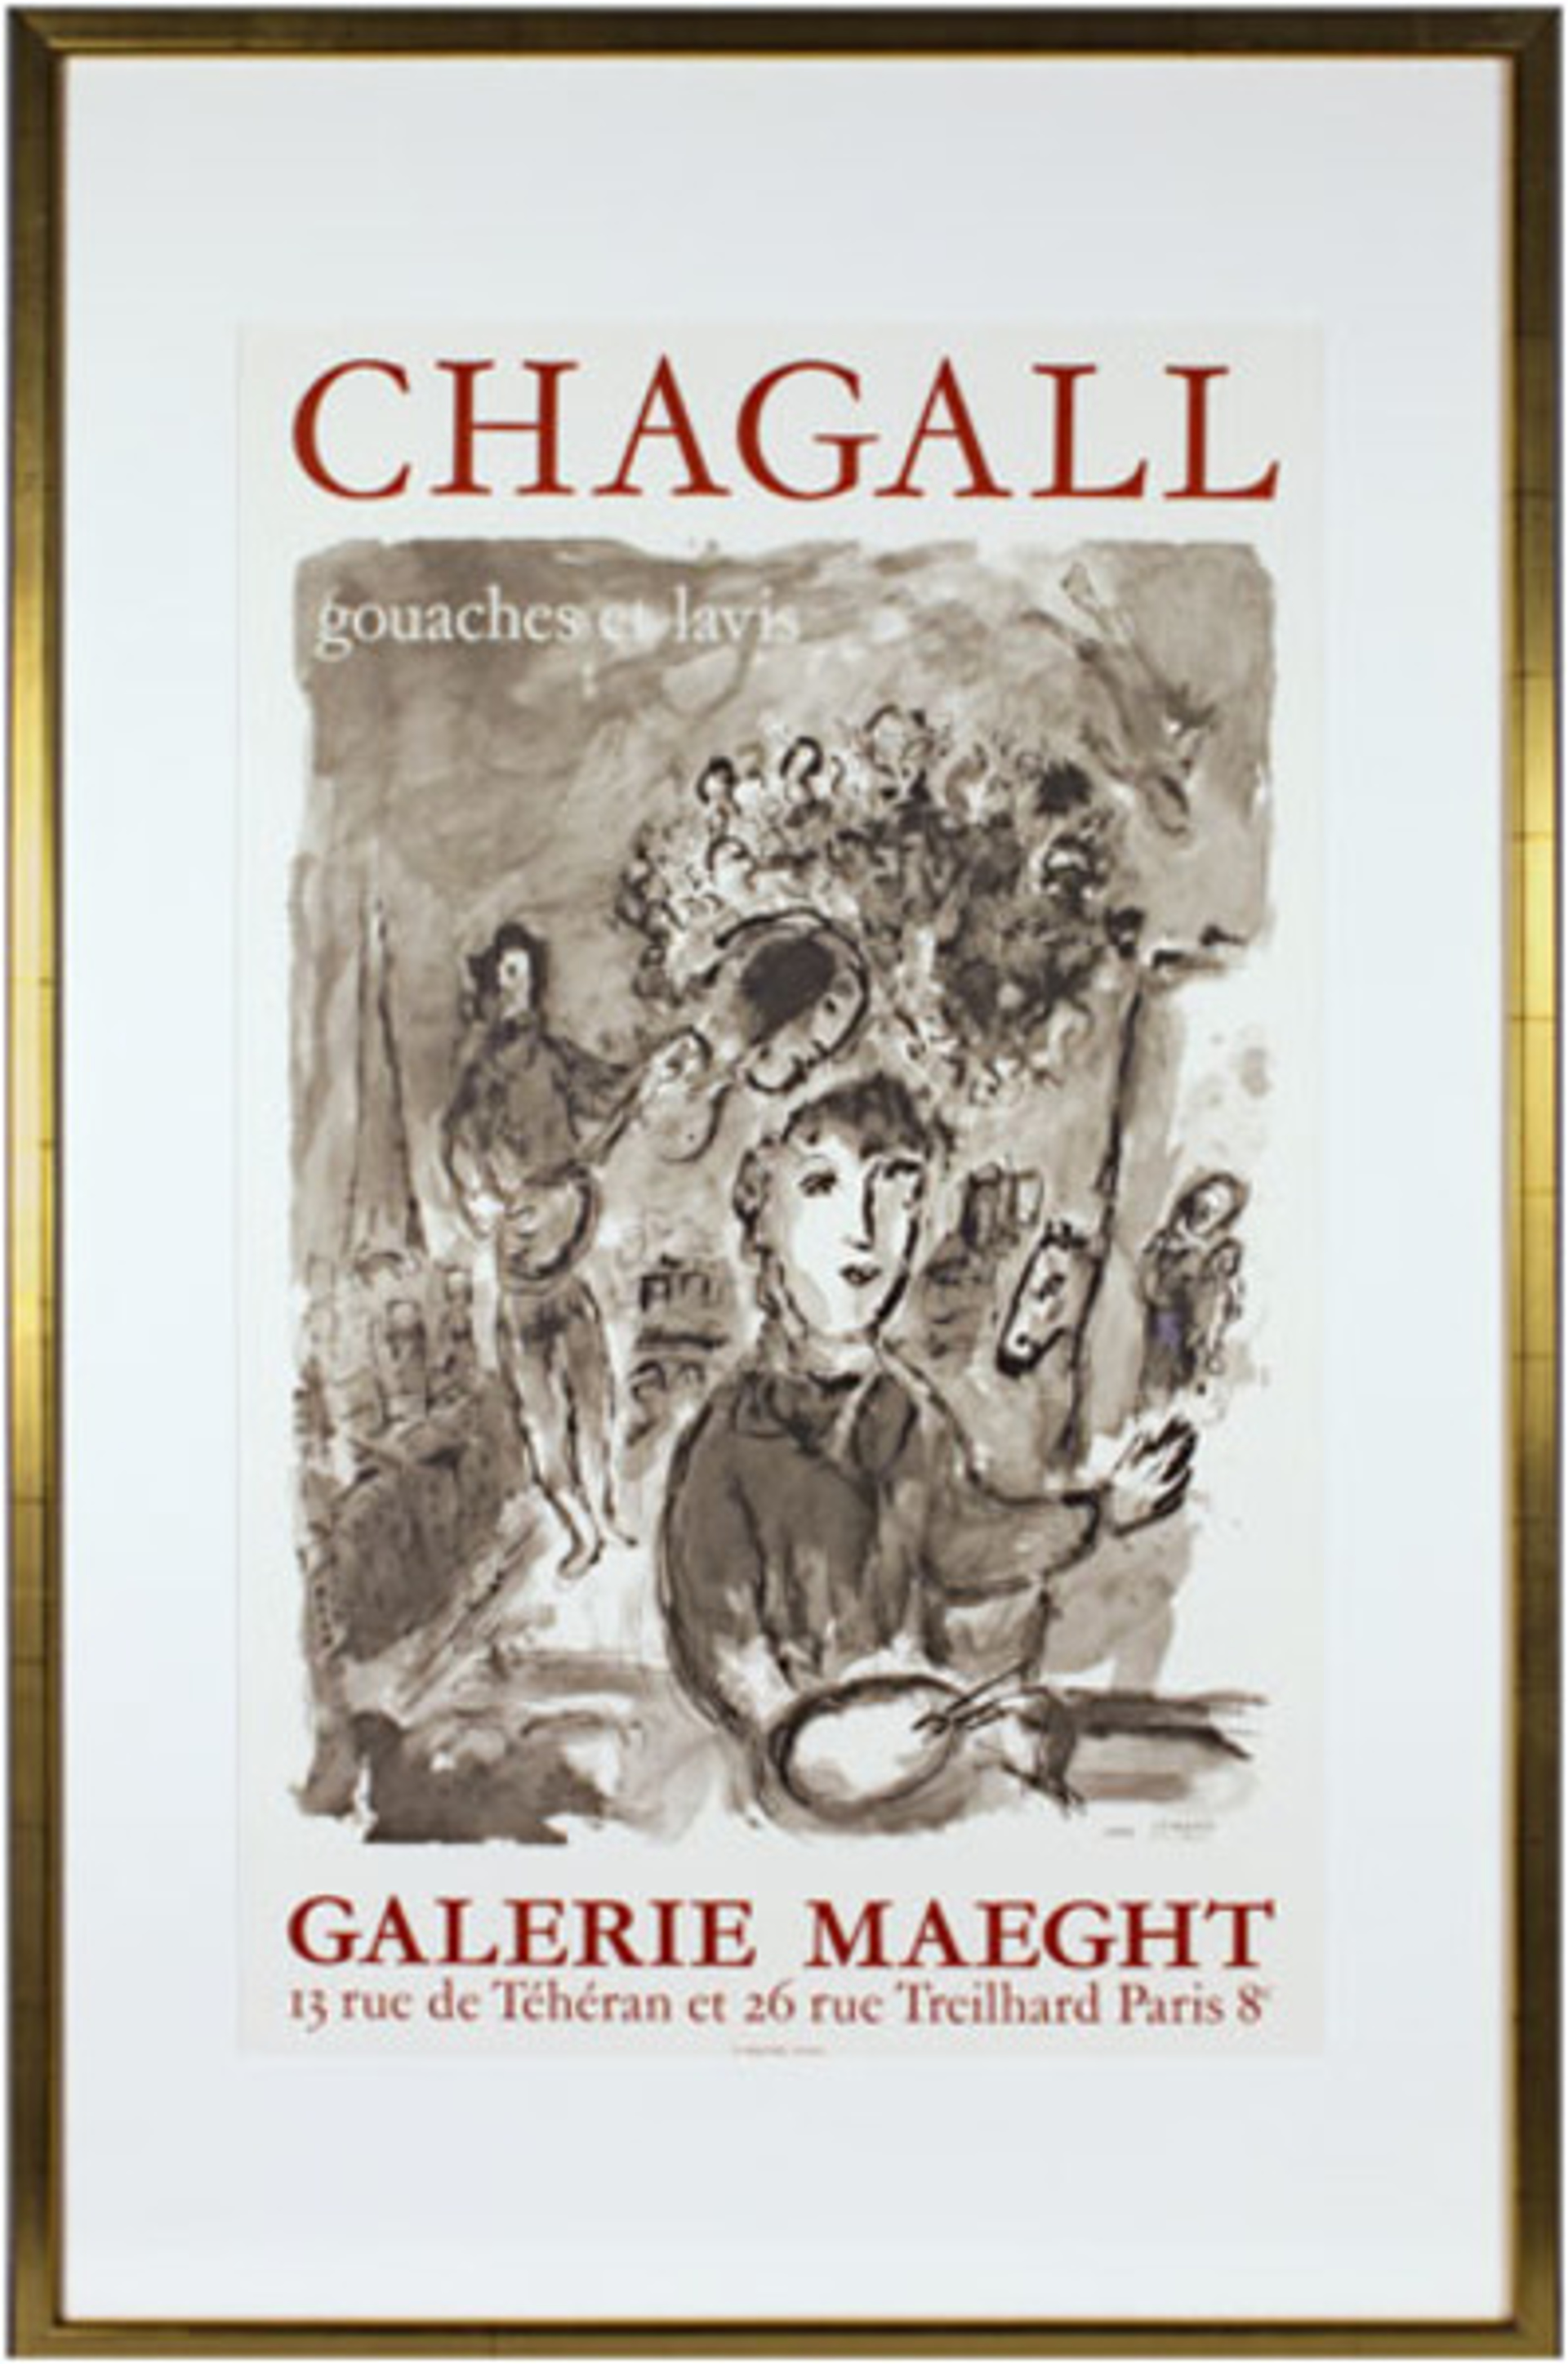 Chagall Gouaches et lavis by Marc Chagall